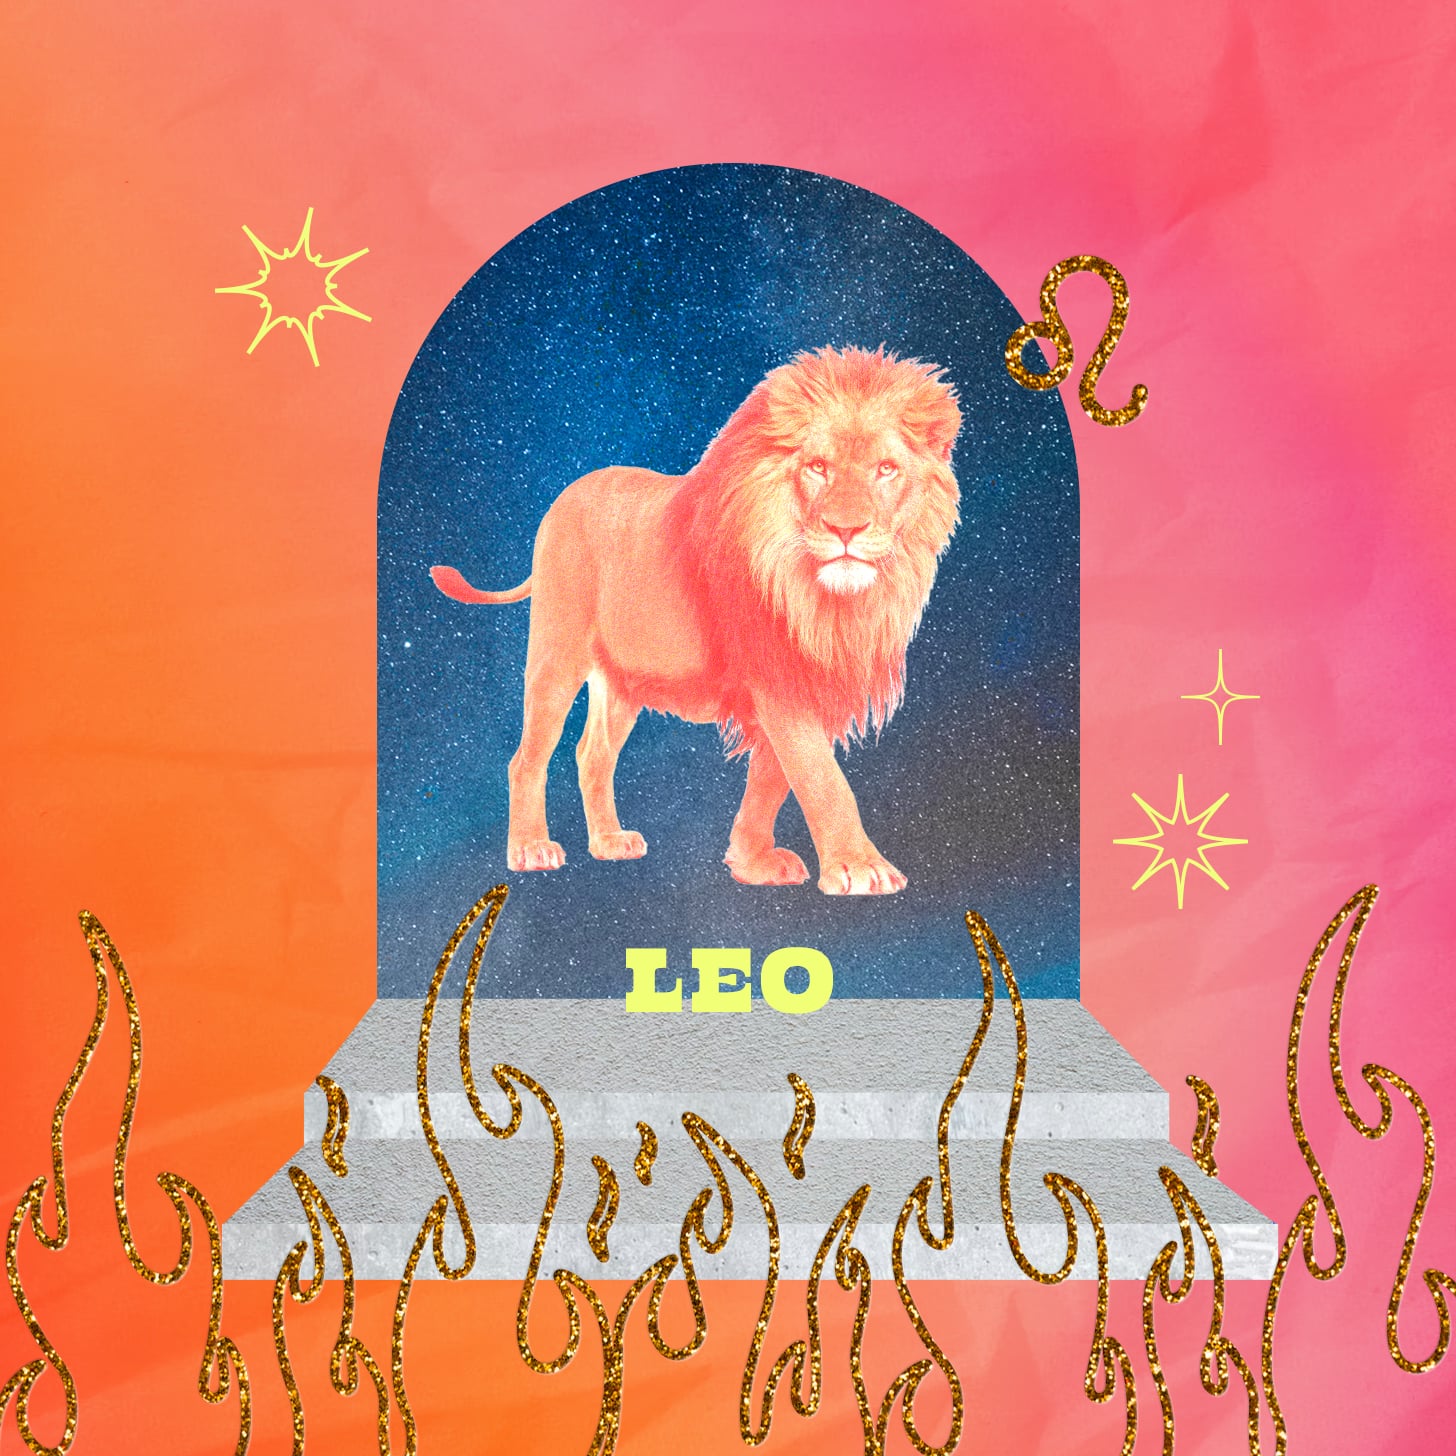 Leo weekly horoscope for November 20, 2022